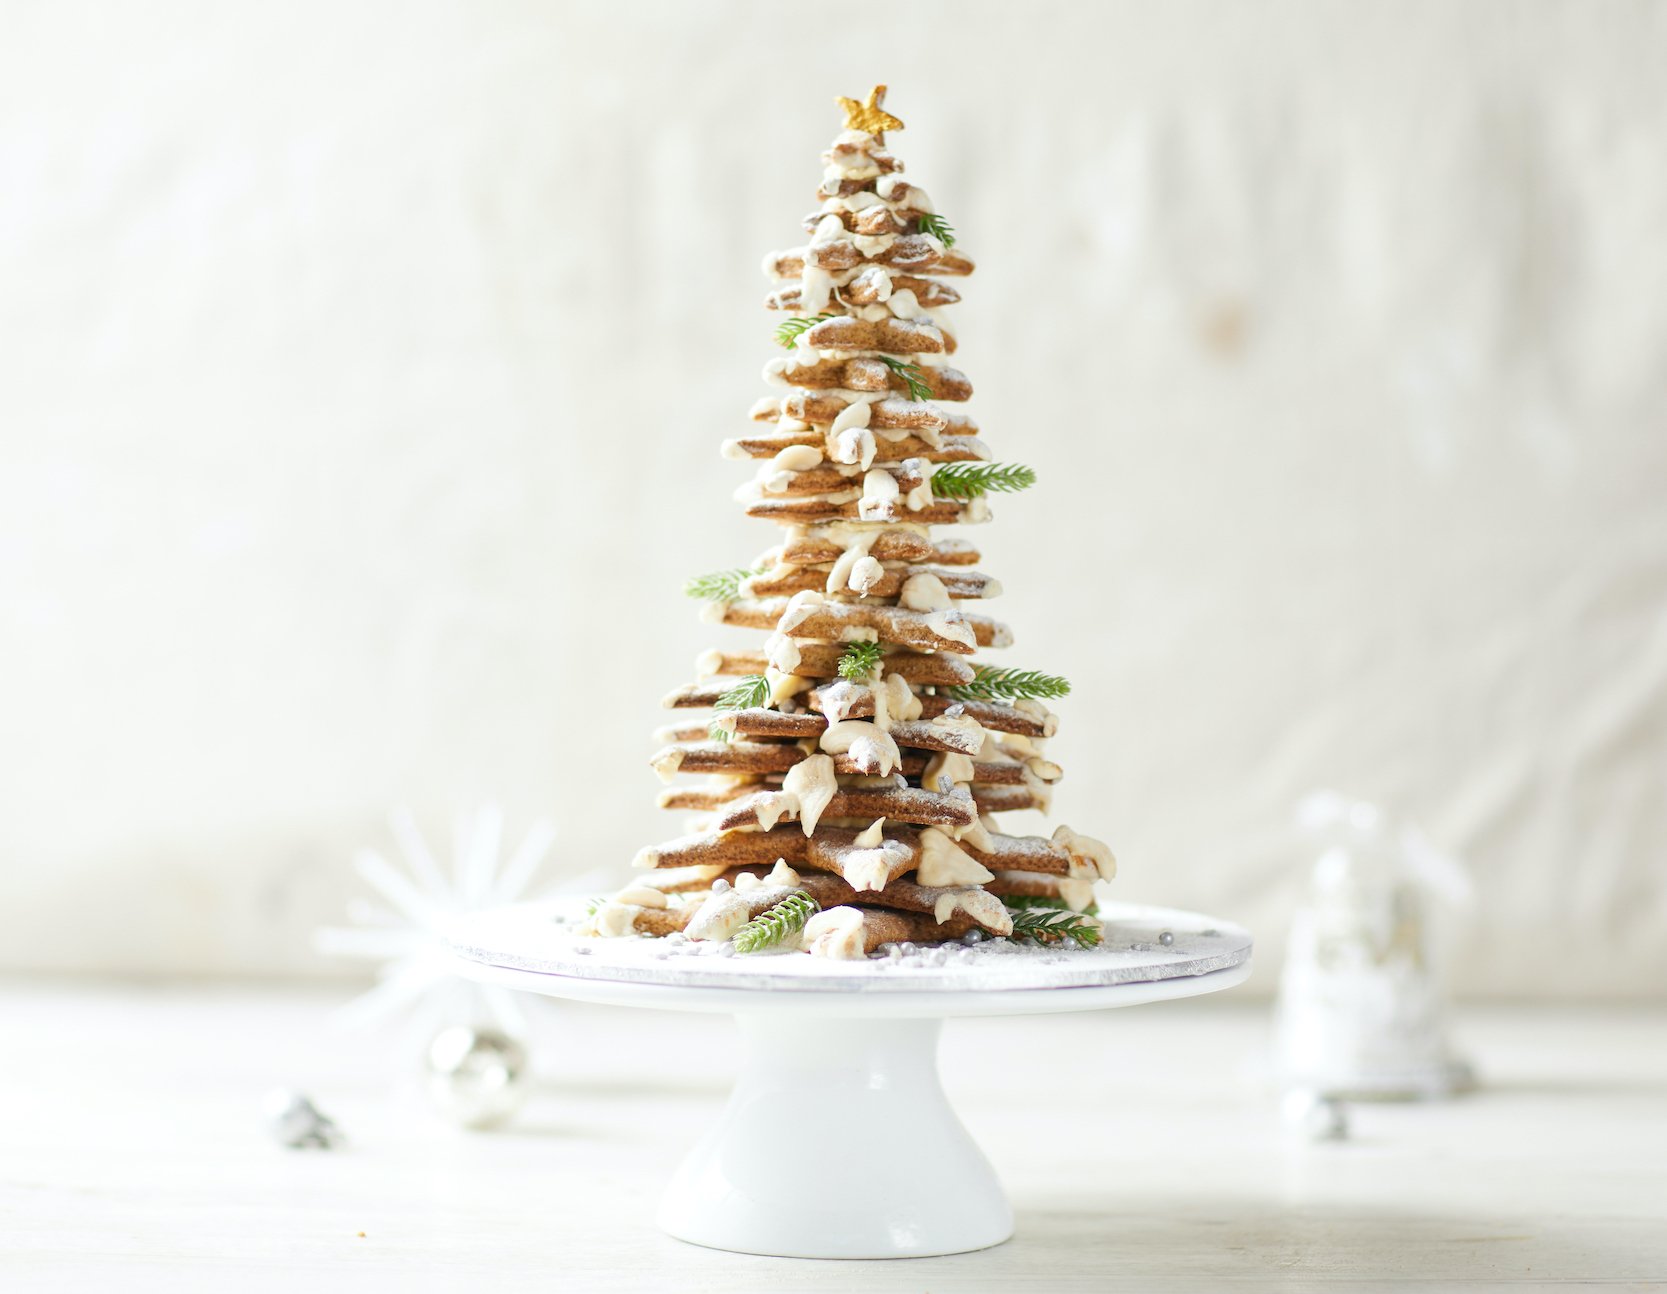 Edible Christmas Gift Ideas (that aren't full of sugar) - Lakanto Australia